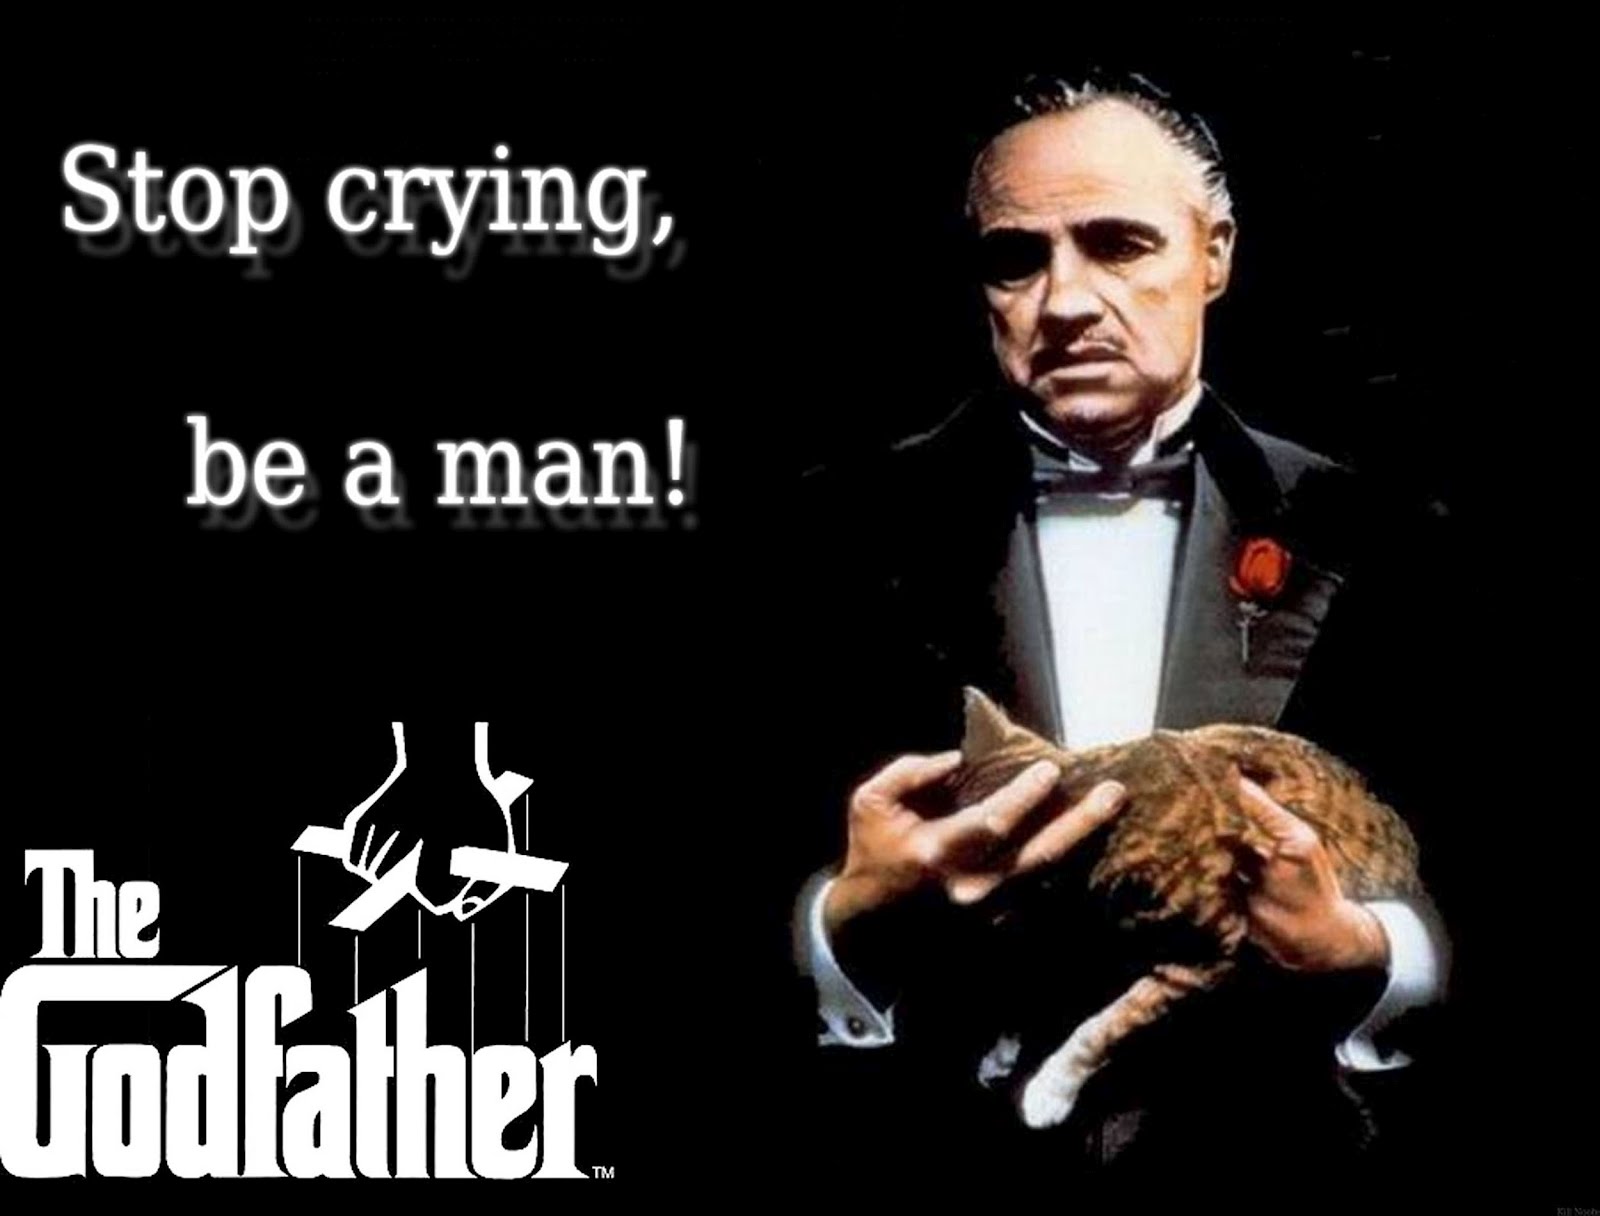 http://2.bp.blogspot.com/-sRimZMnr__A/UBPvkhxmMII/AAAAAAAAAmM/oifpLc0lPbk/s1600/The-Godfather1-Movie-Poster1.jpg